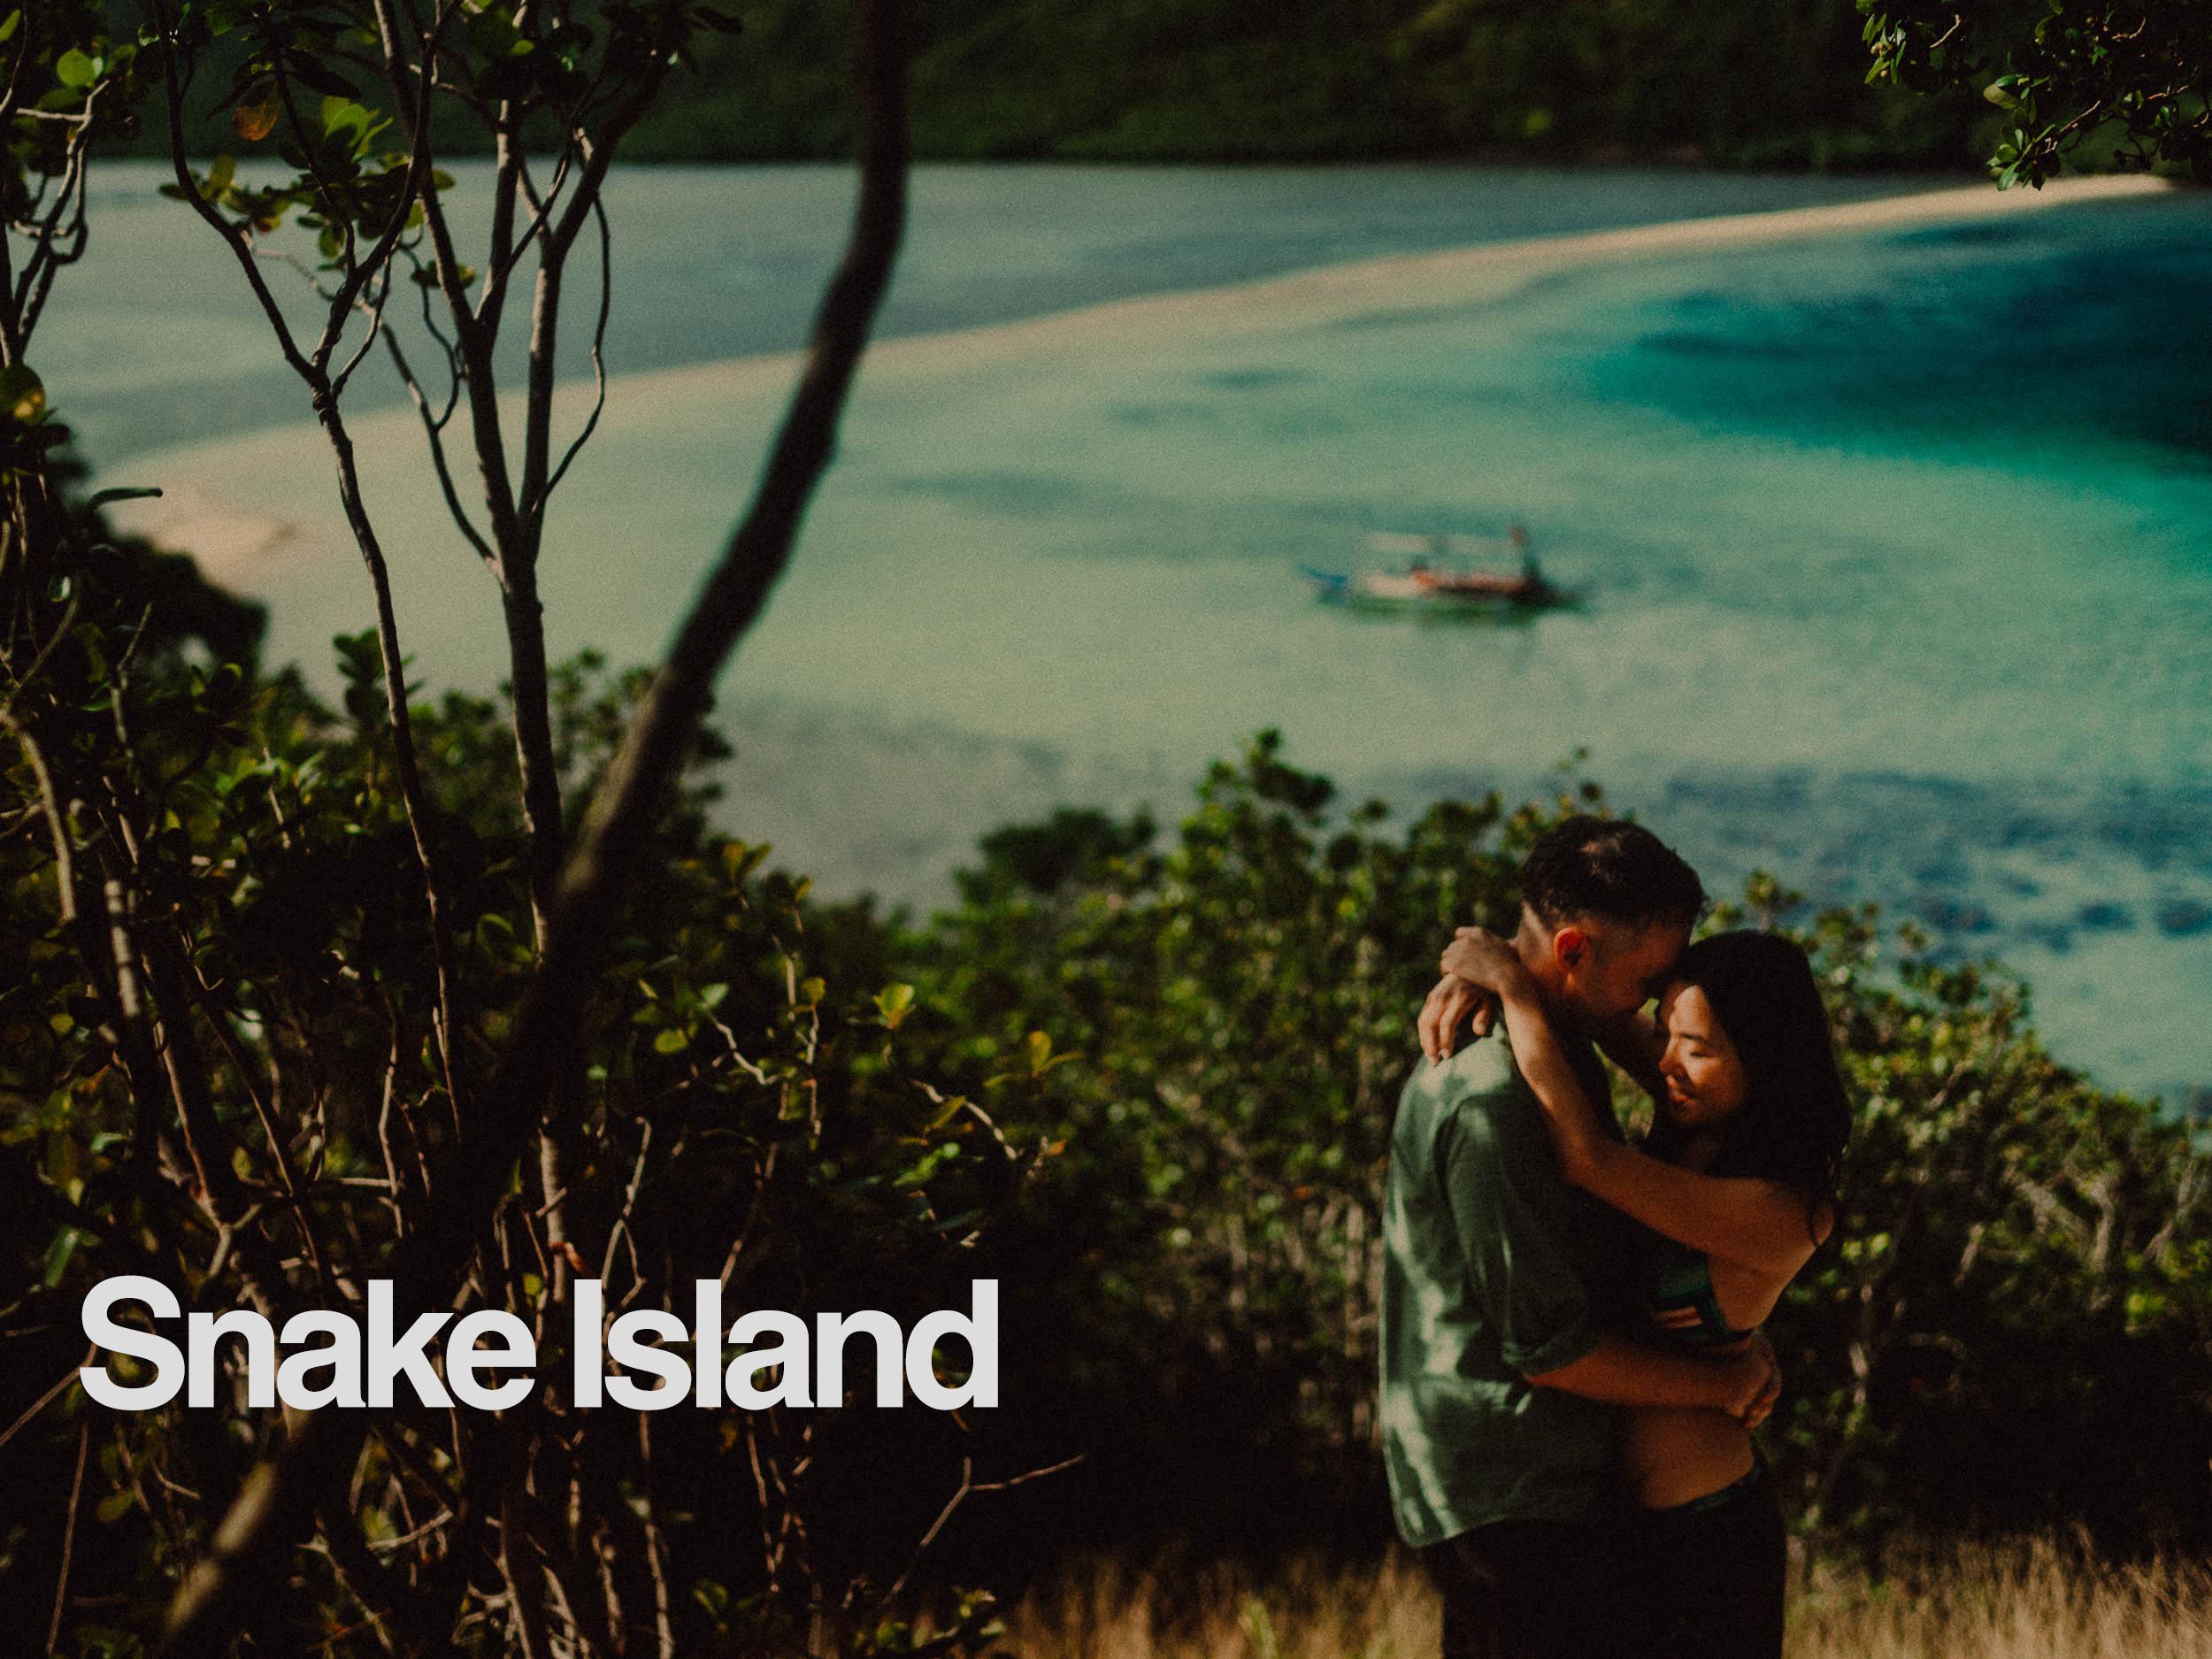 1-Snake Island El Nido Palawan Philippines-An adventure engagement session, Snake Island sandbar from a hilltop in Vigan Island, El Nido, Palawan, Philippines, Southeast Asia, January 2017, Leica M.jpg